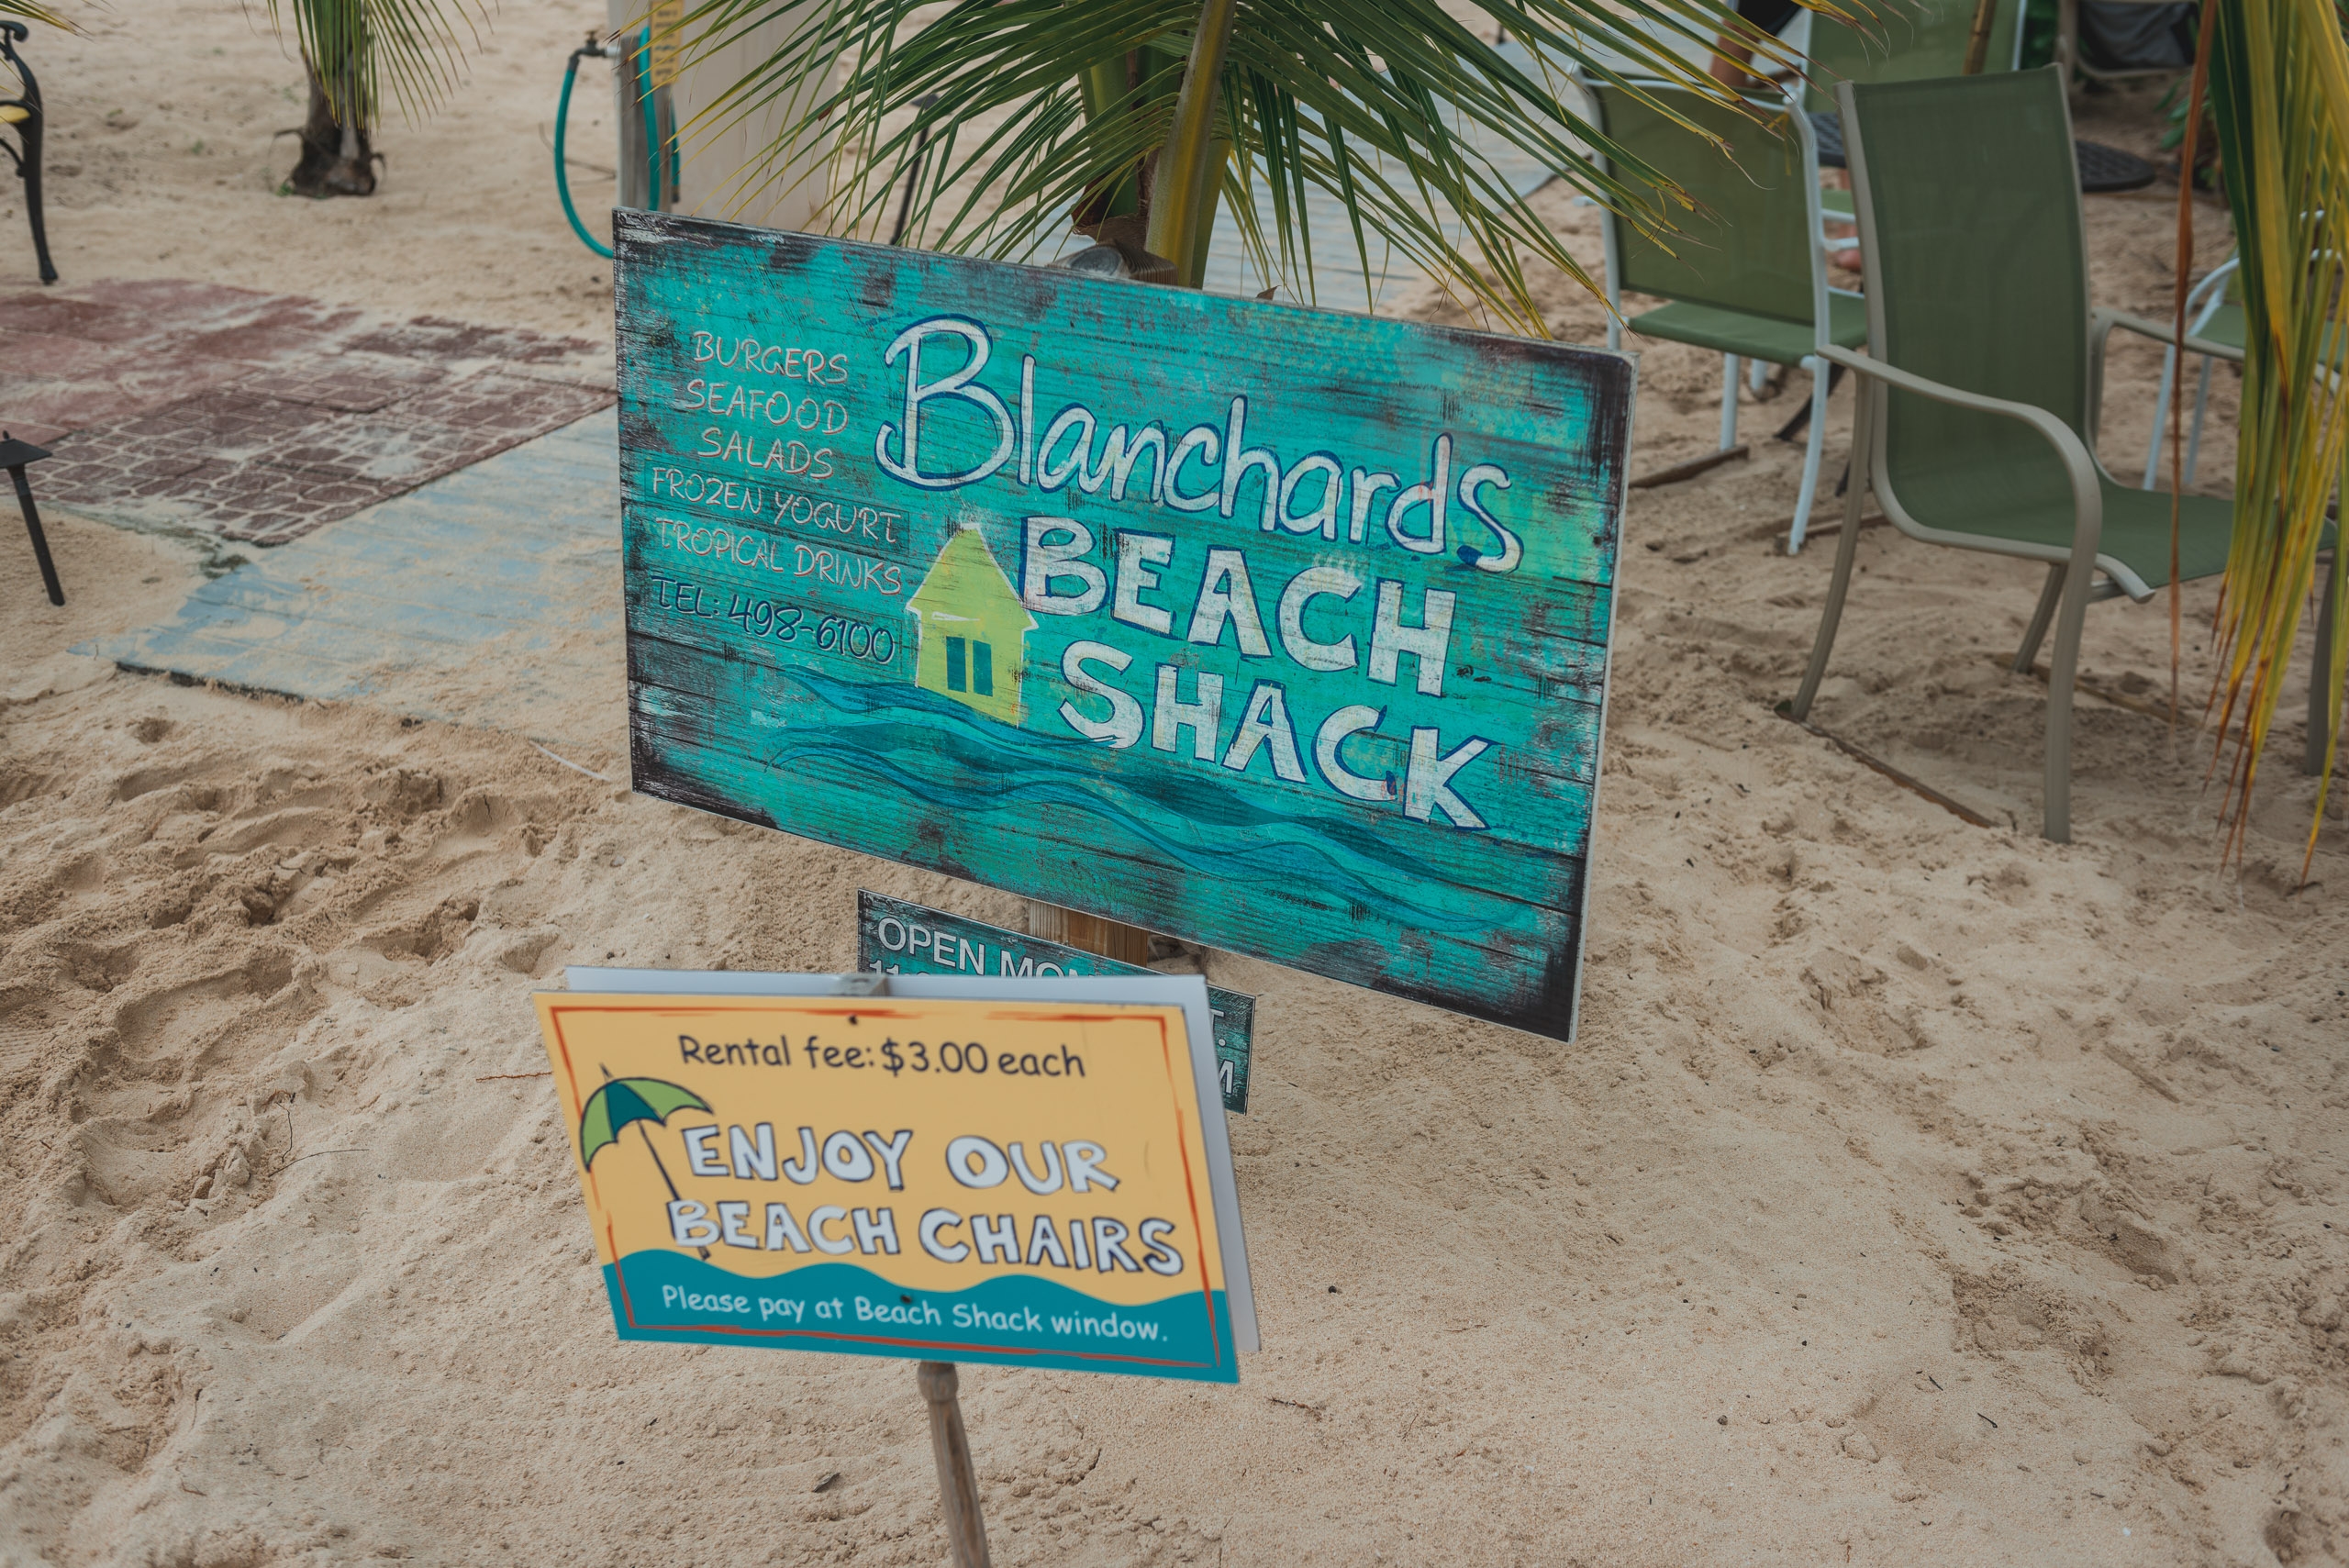 Lunch at Blanchard's Beach Shack